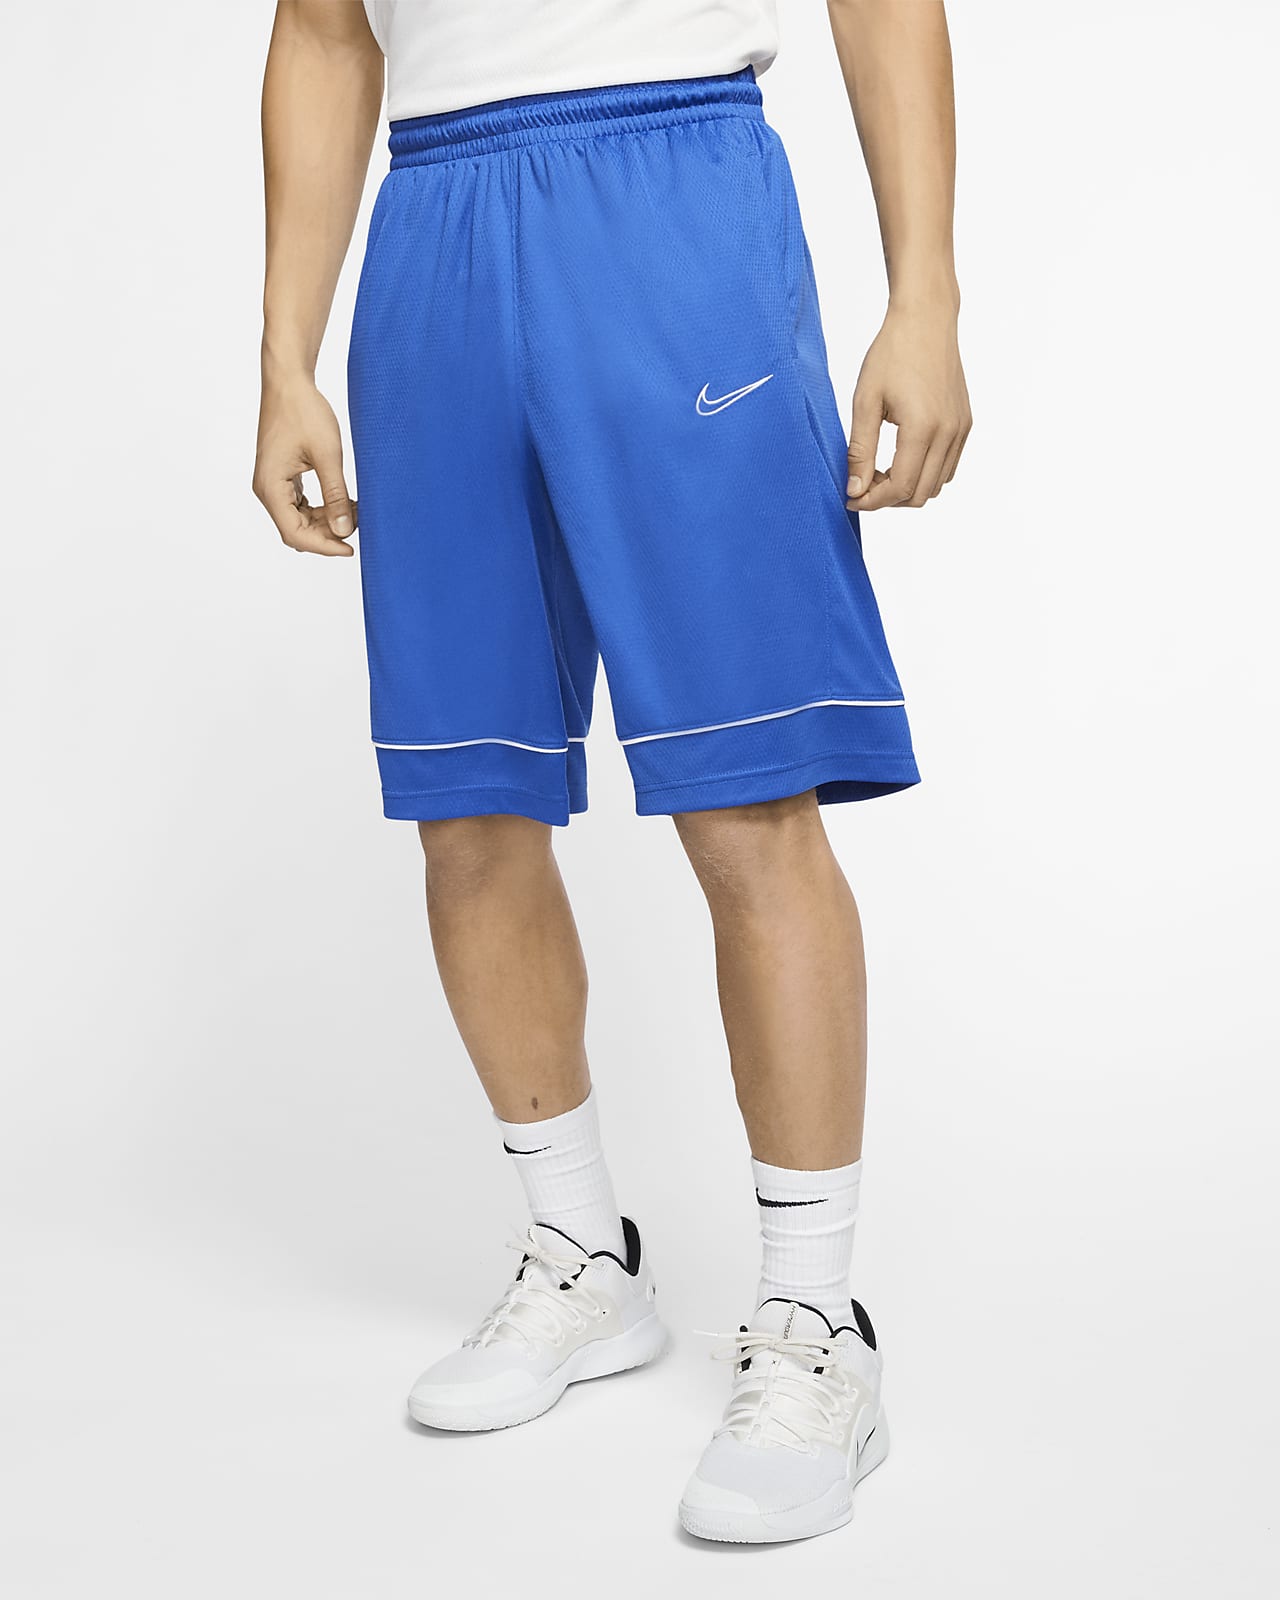 Nike Men's Basketball Shorts